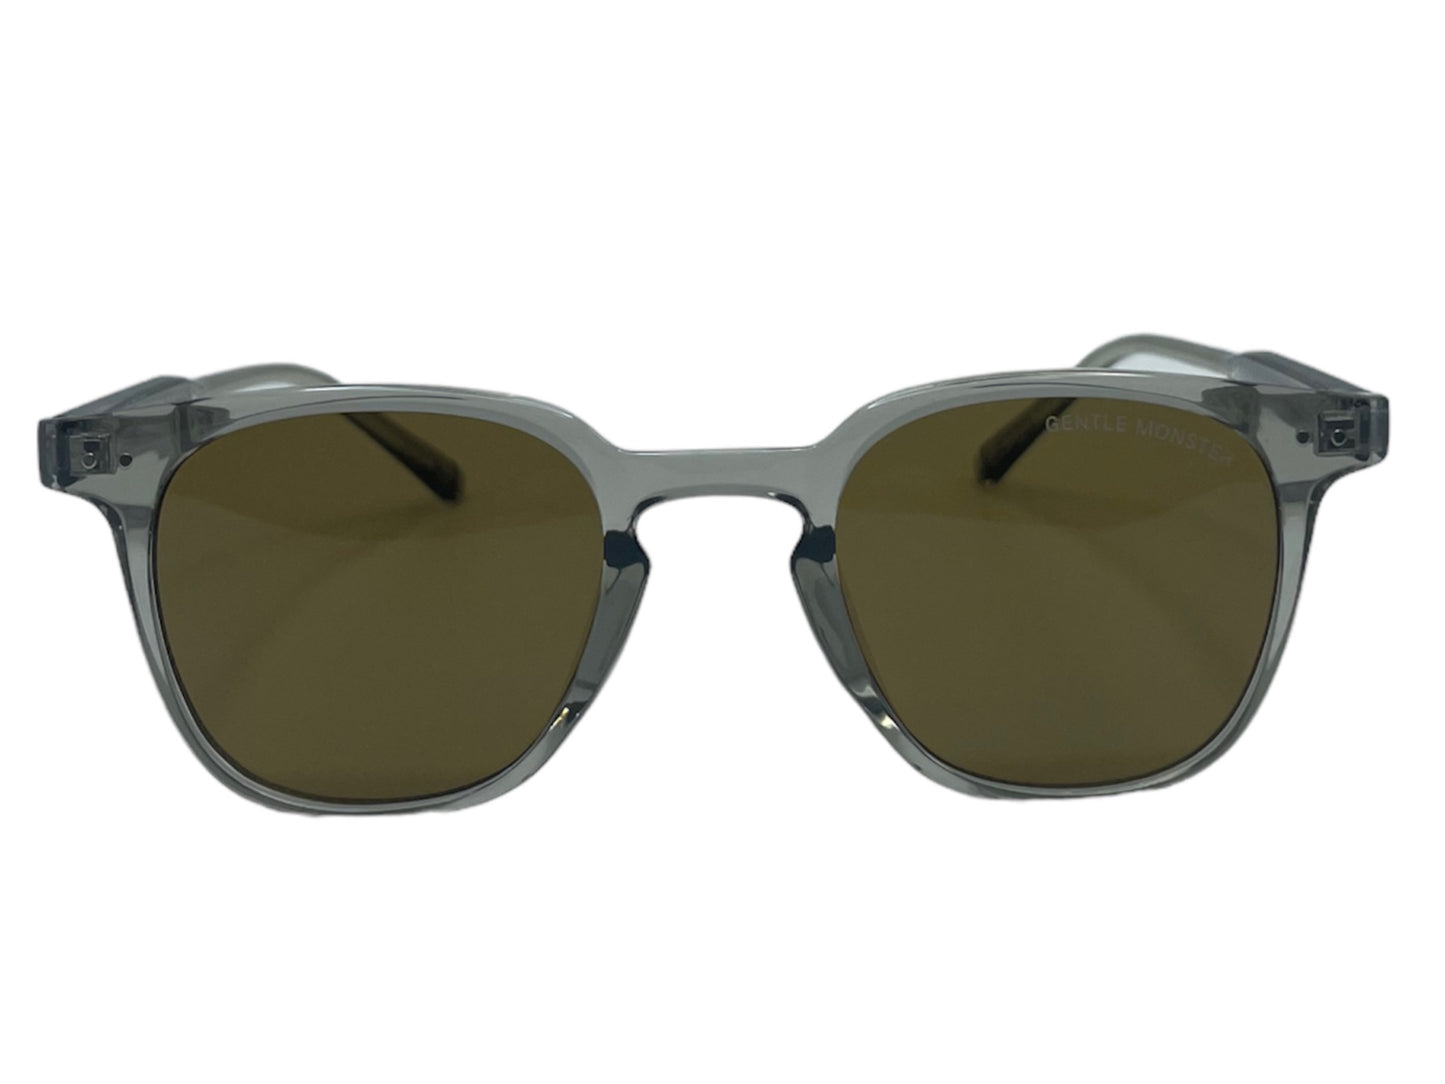 NS Deluxe - 6265 - Black - Sunglasses